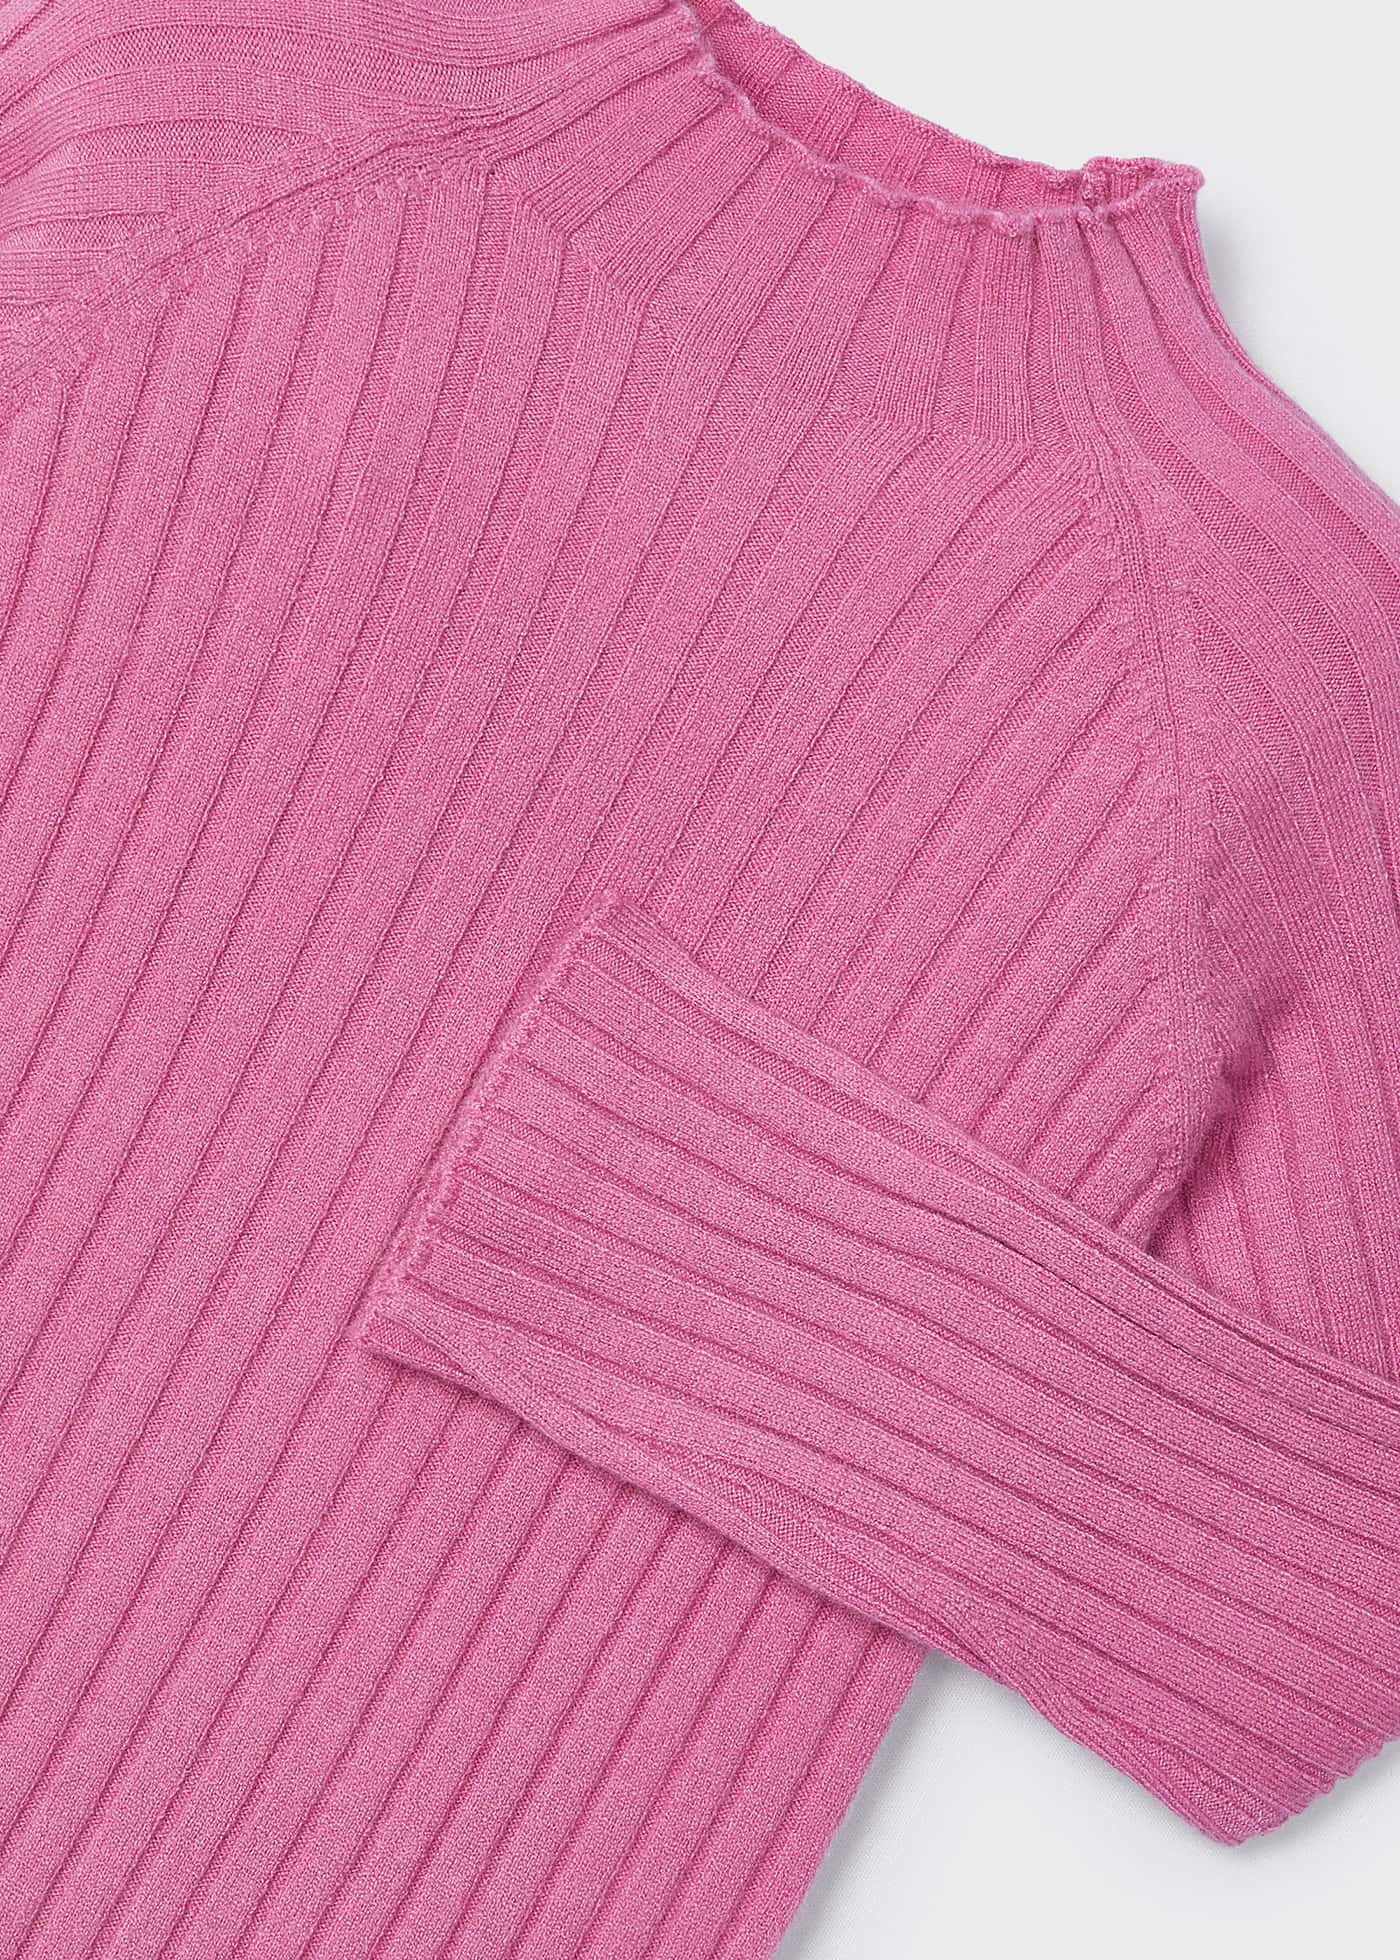 Rib-knit mock turtleneck top girls